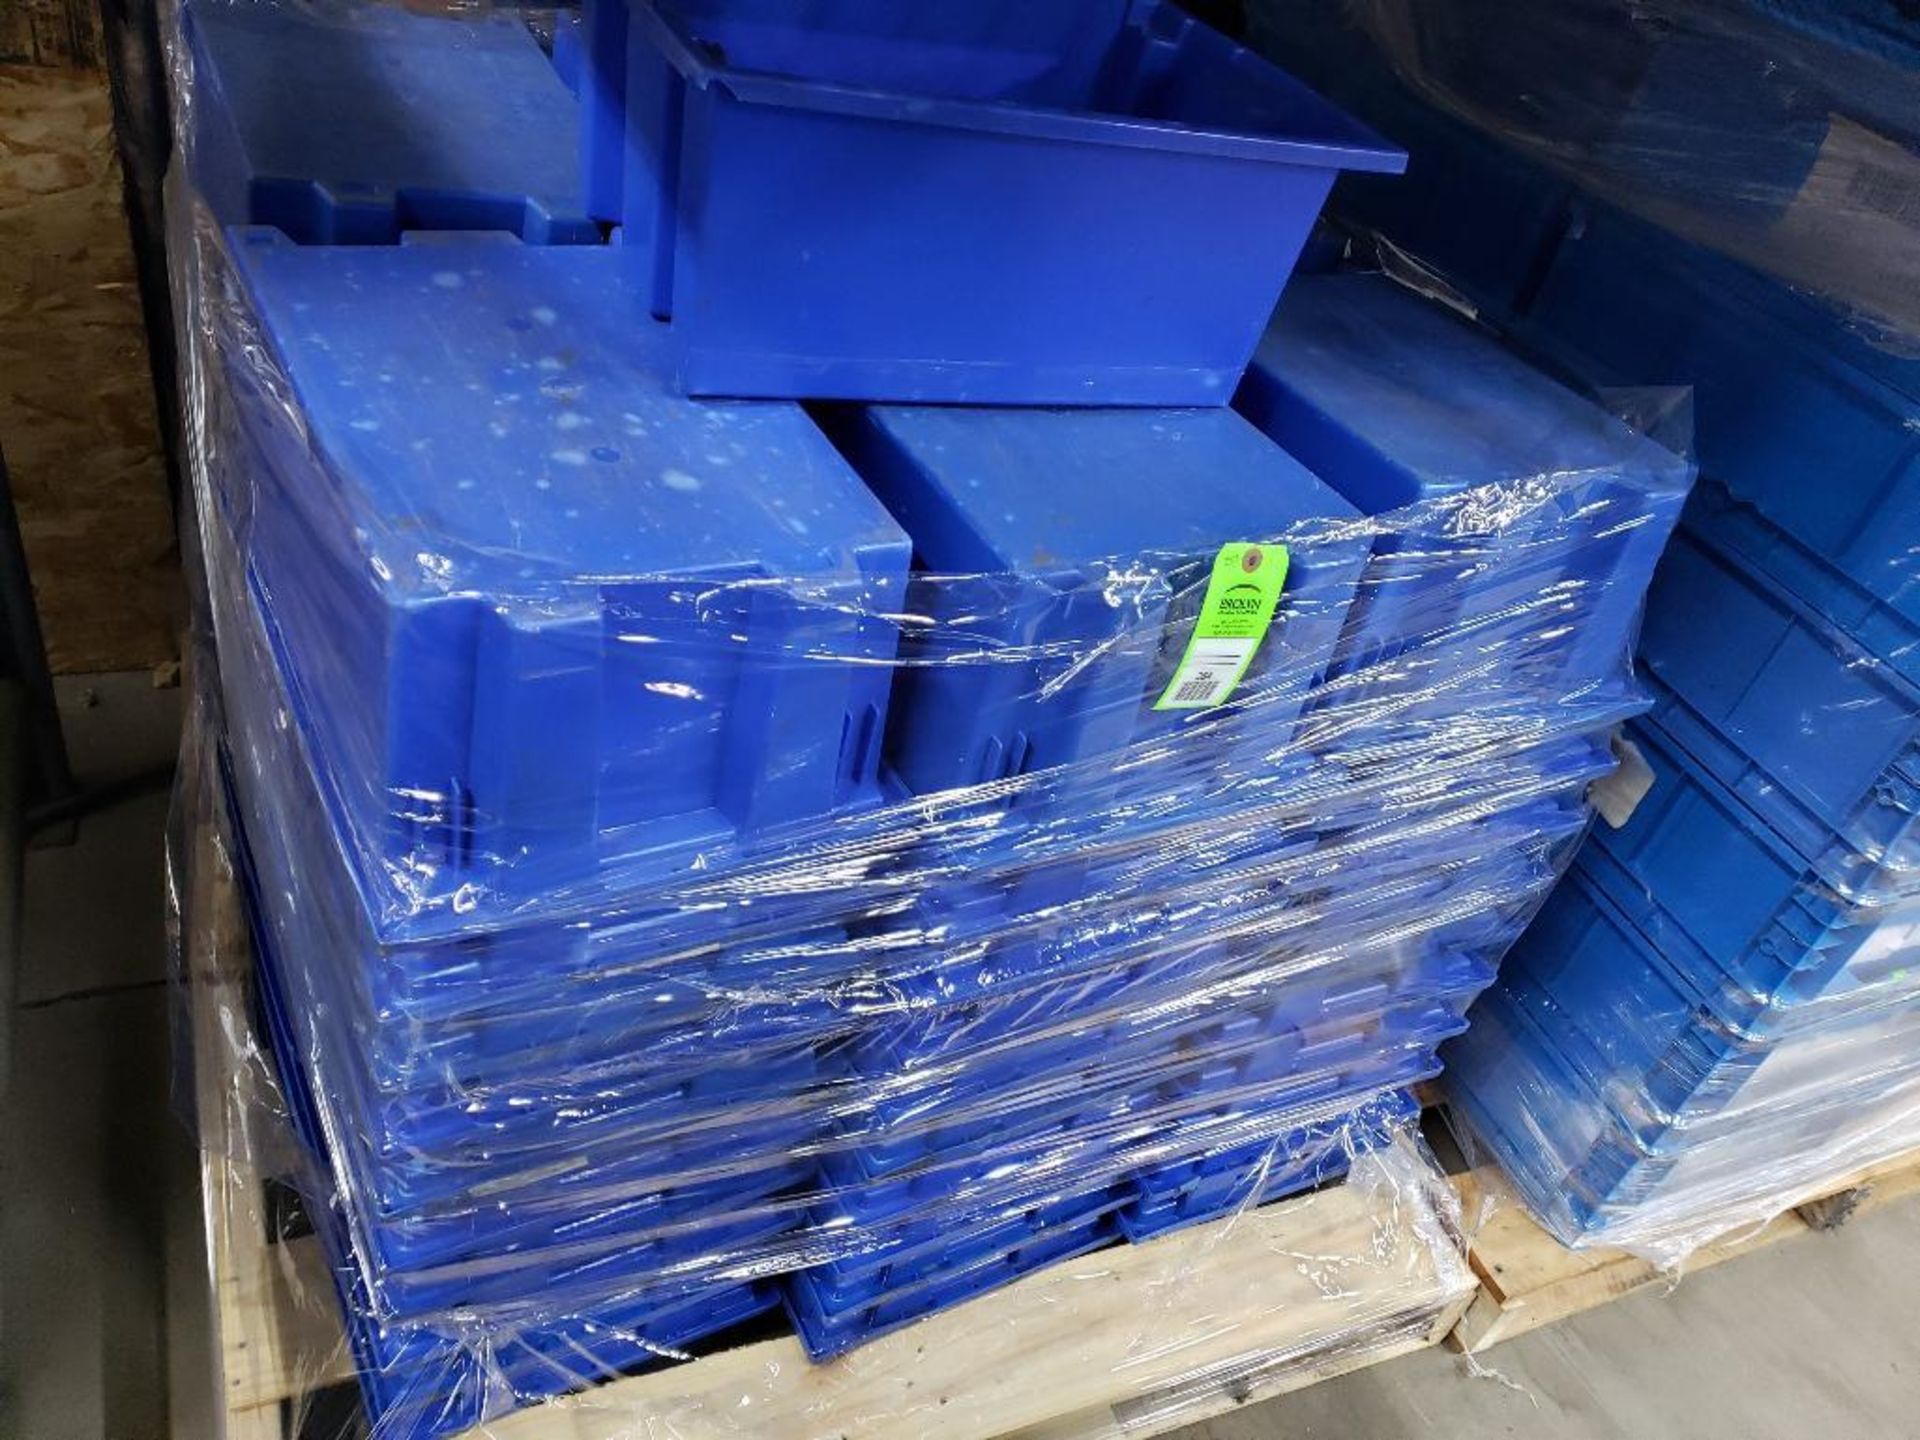 Qty 60 - plastic storage bins. - Image 2 of 3